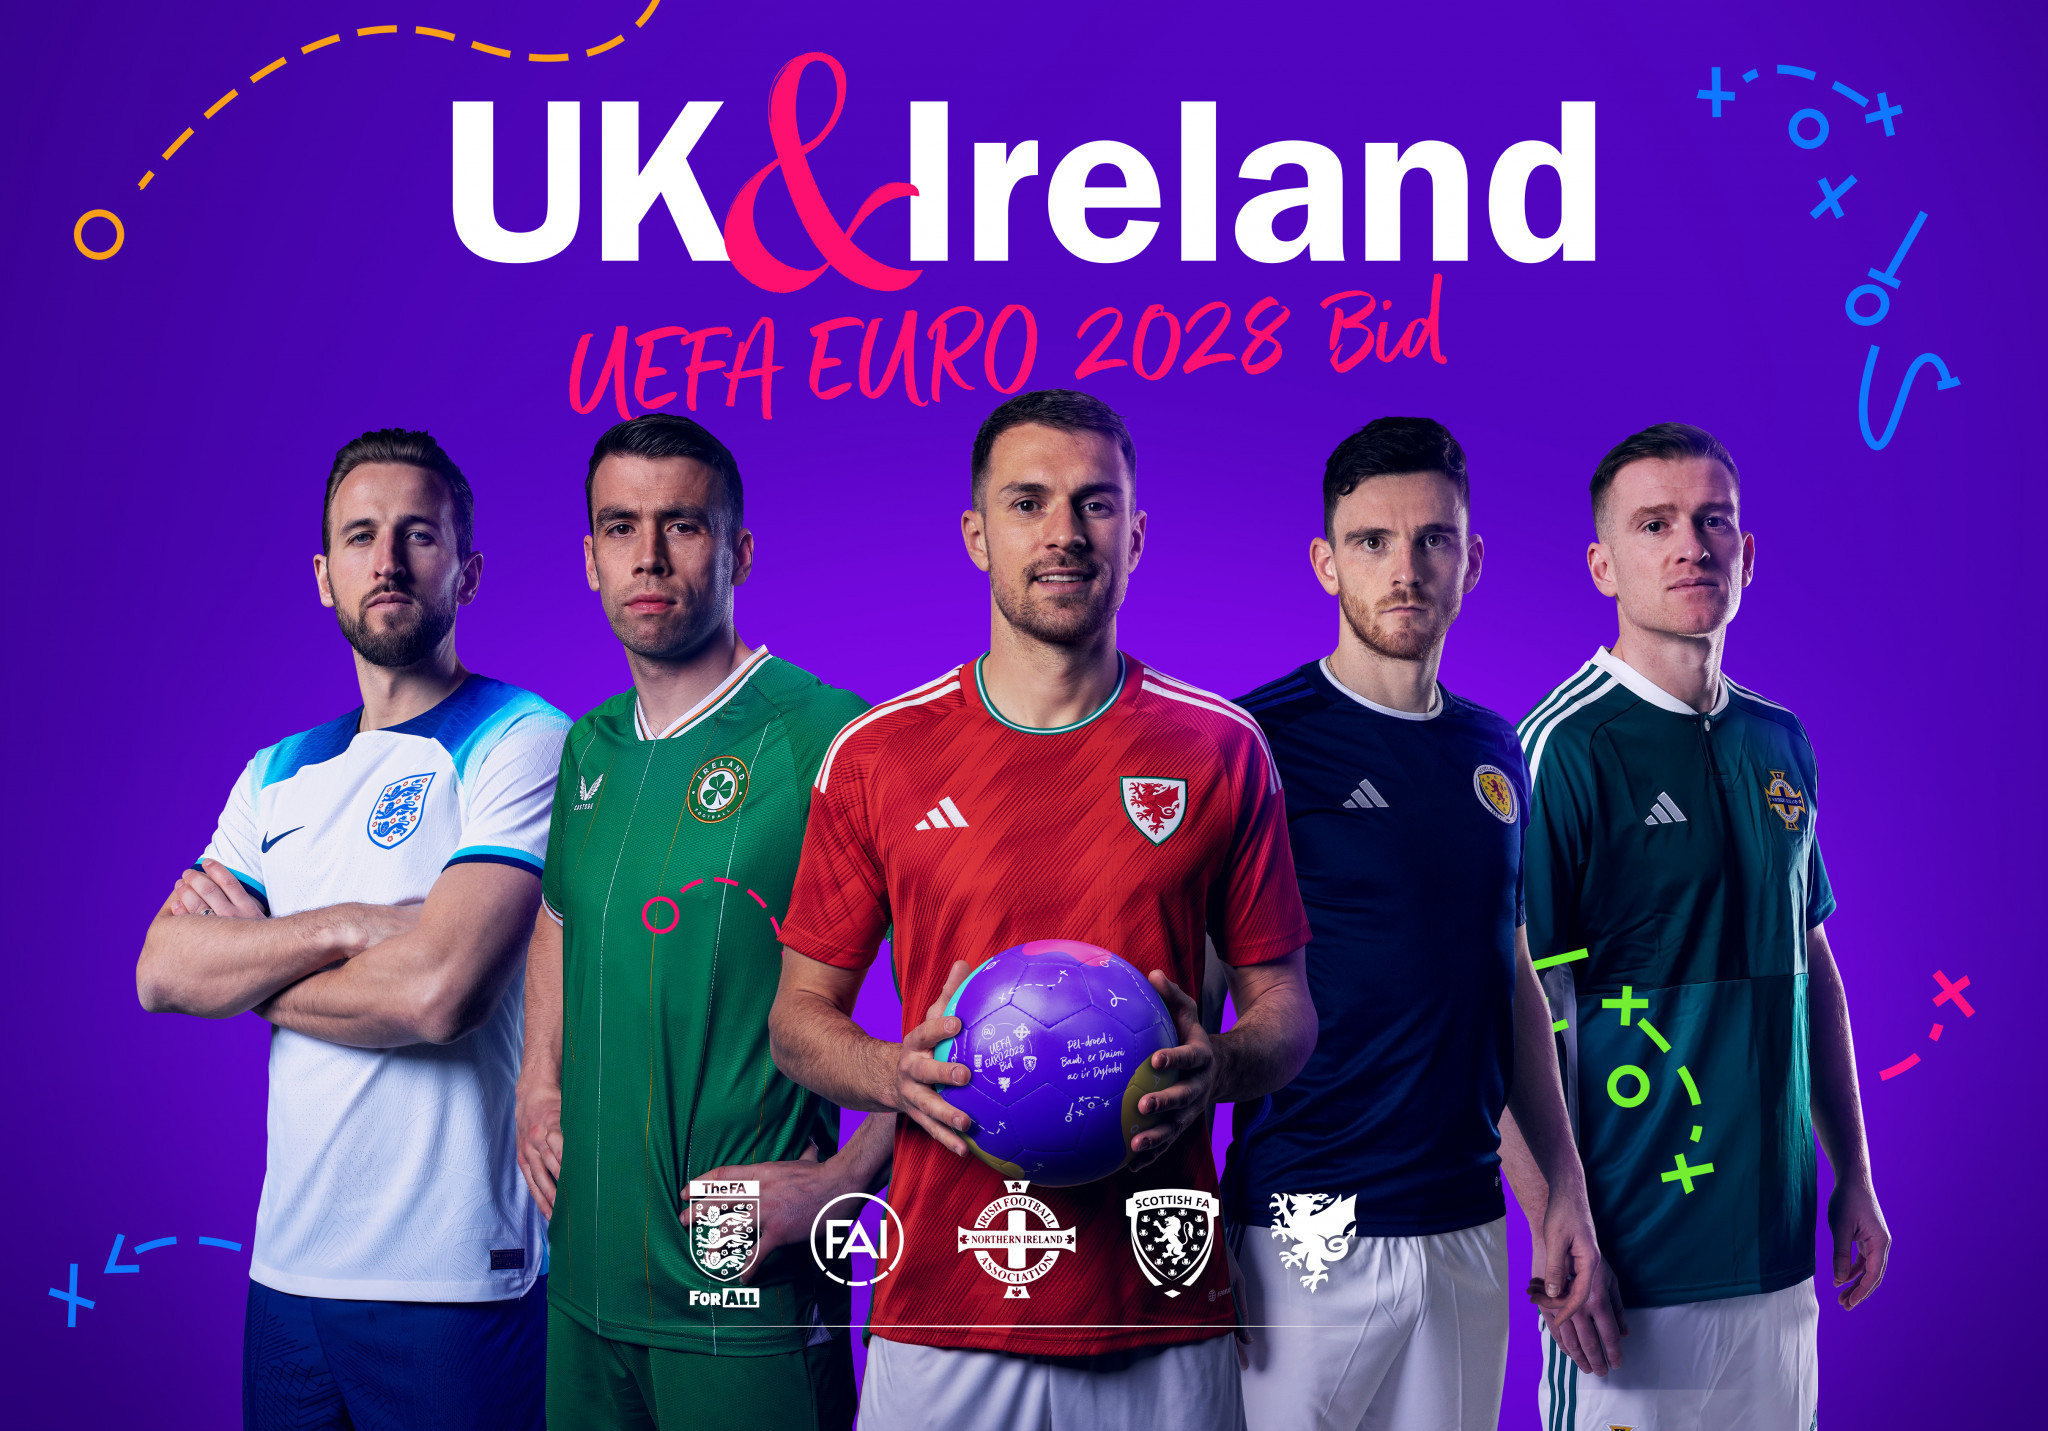 The UK and Ireland has bid for UEFA Euro 2028 as have Turkey, while Italy is bidding for the 2032 tournament ©UK & Ireland UEFA EURO 2028 Bid